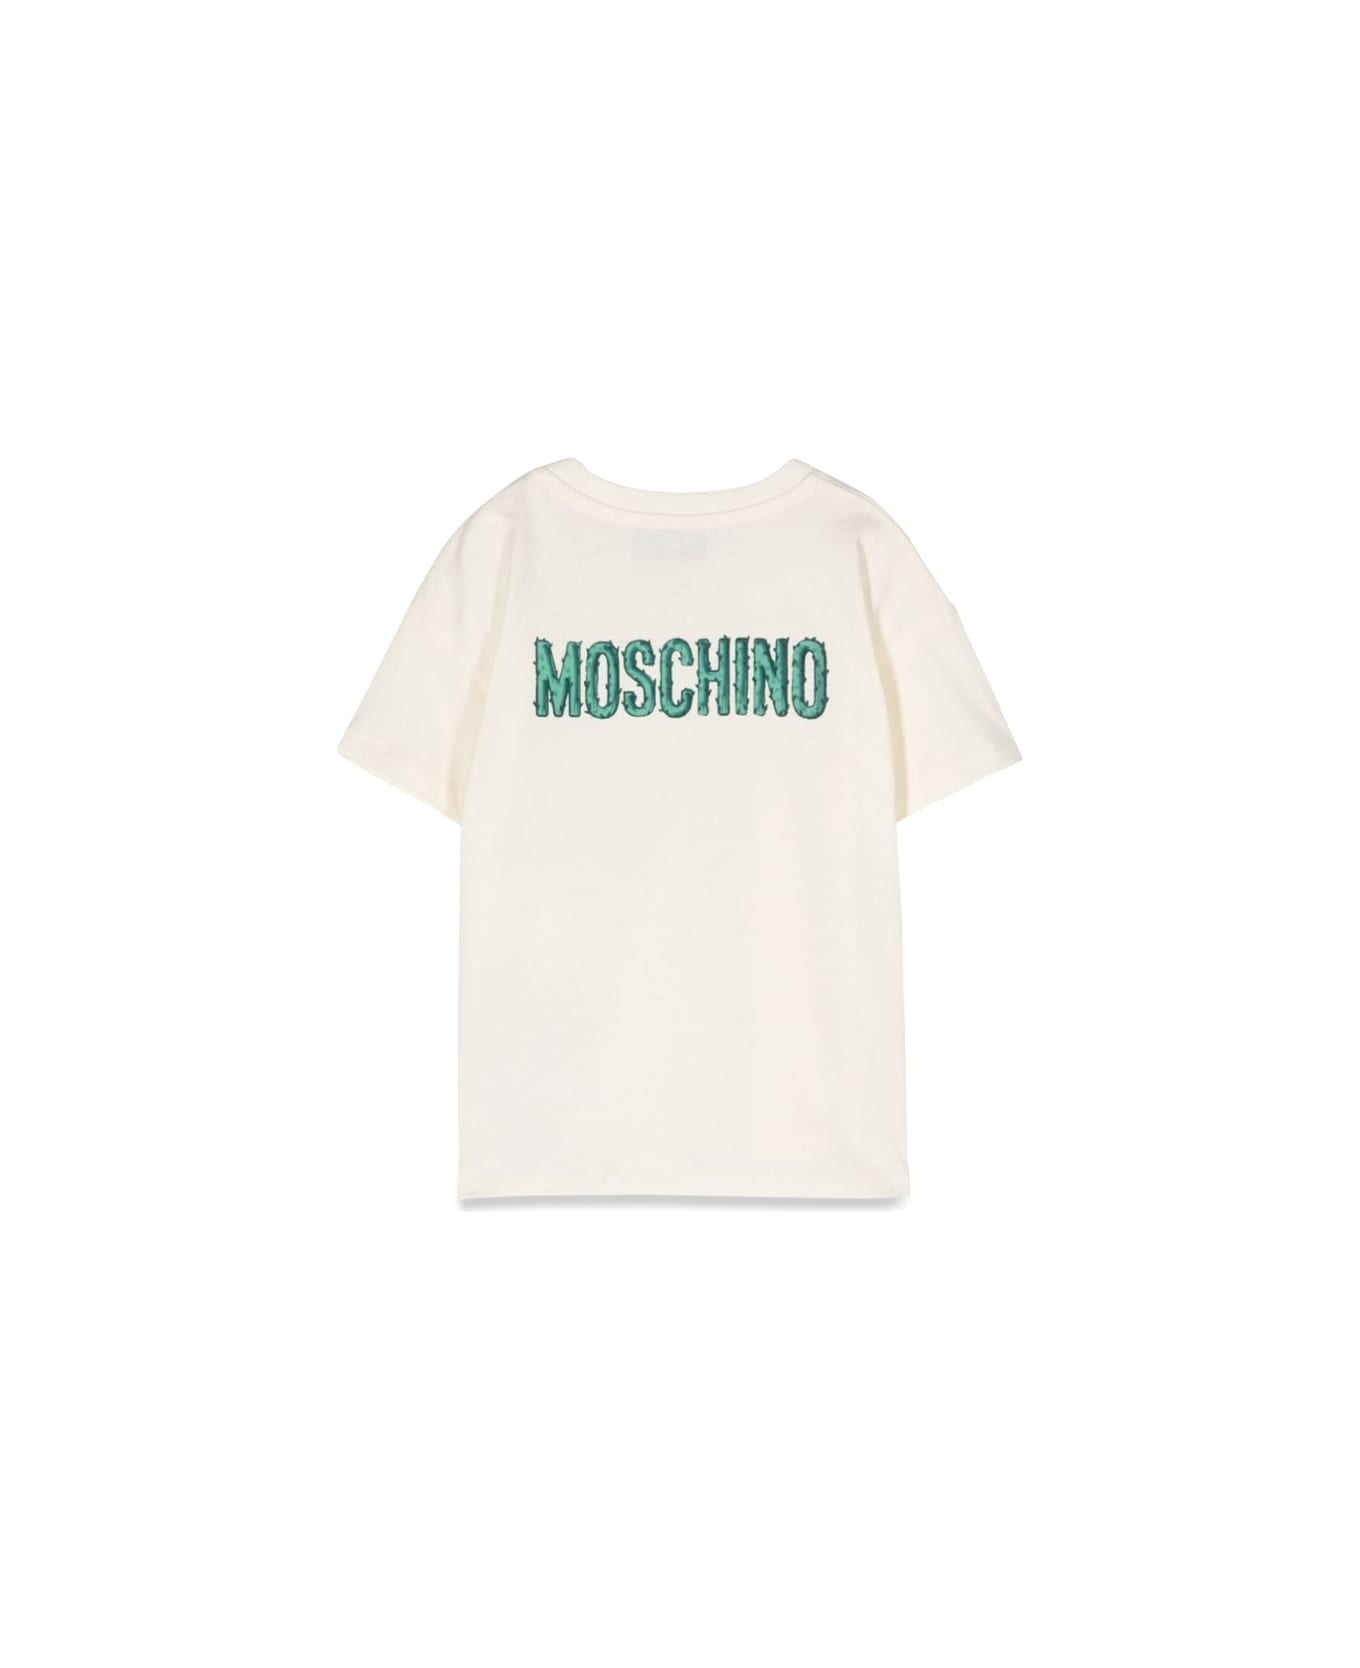 Moschino T-shirt - MULTICOLOUR